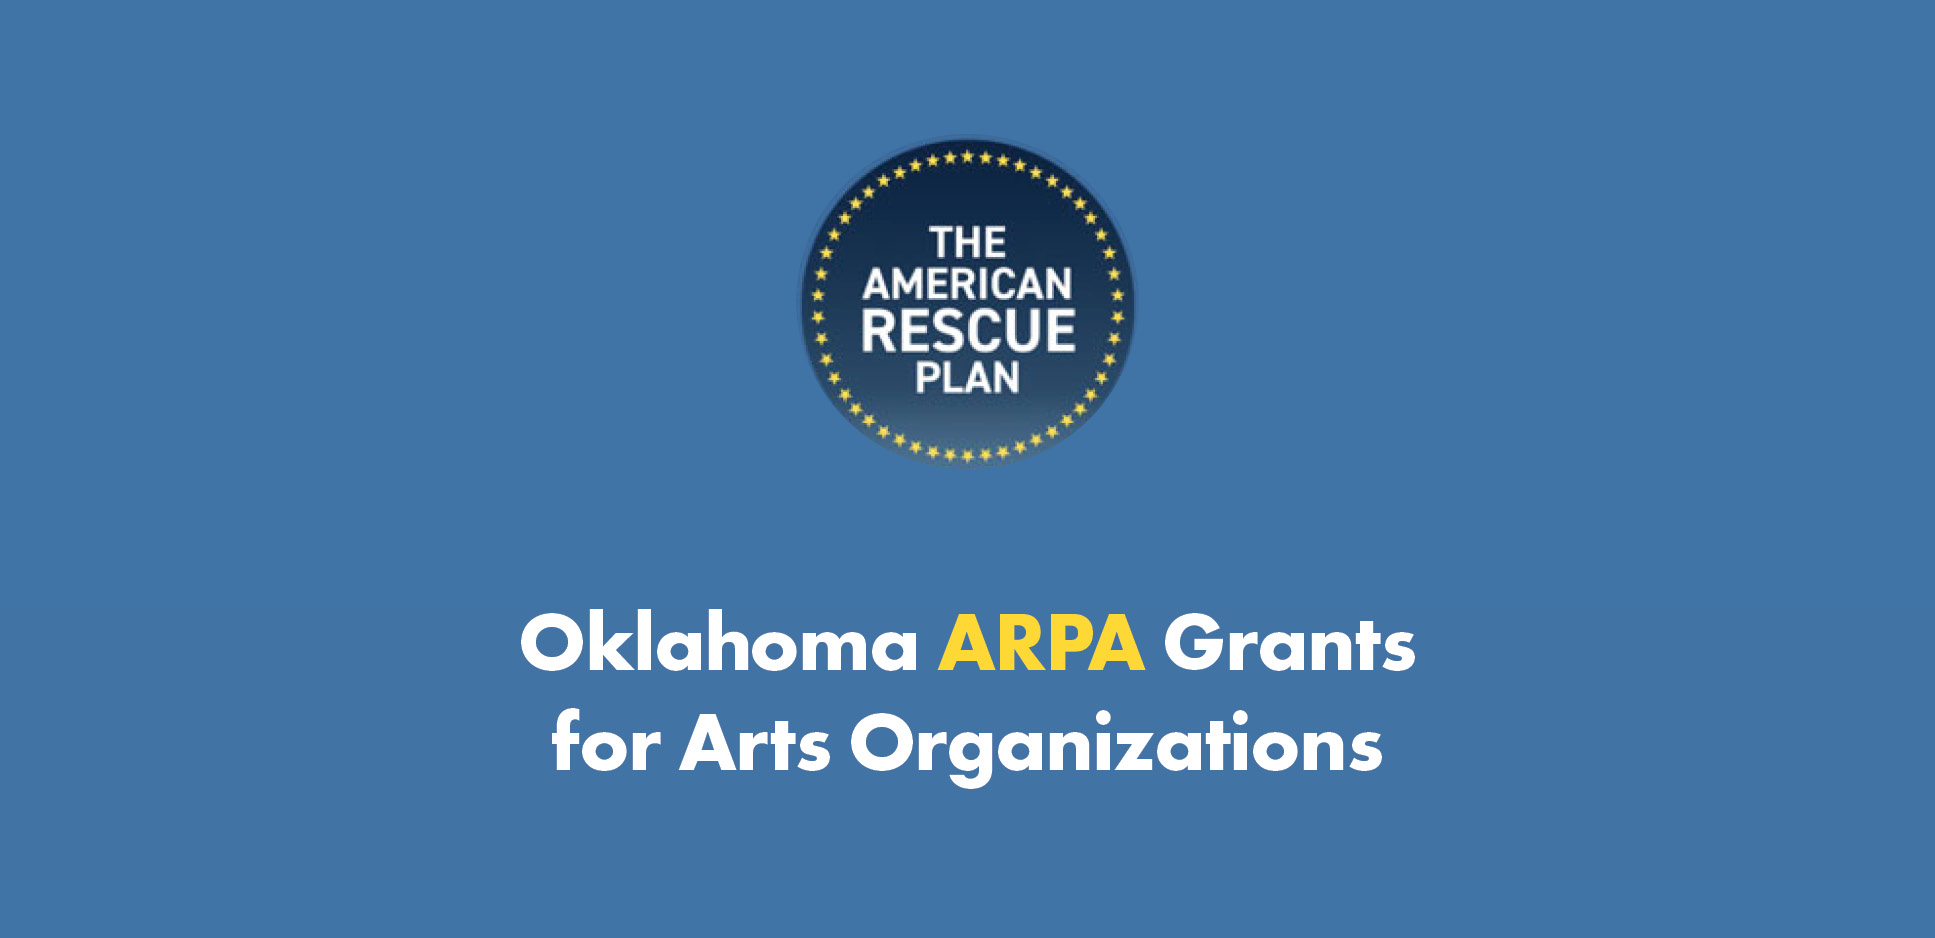 Oklahoma ARPA Grants for Arts Organizations